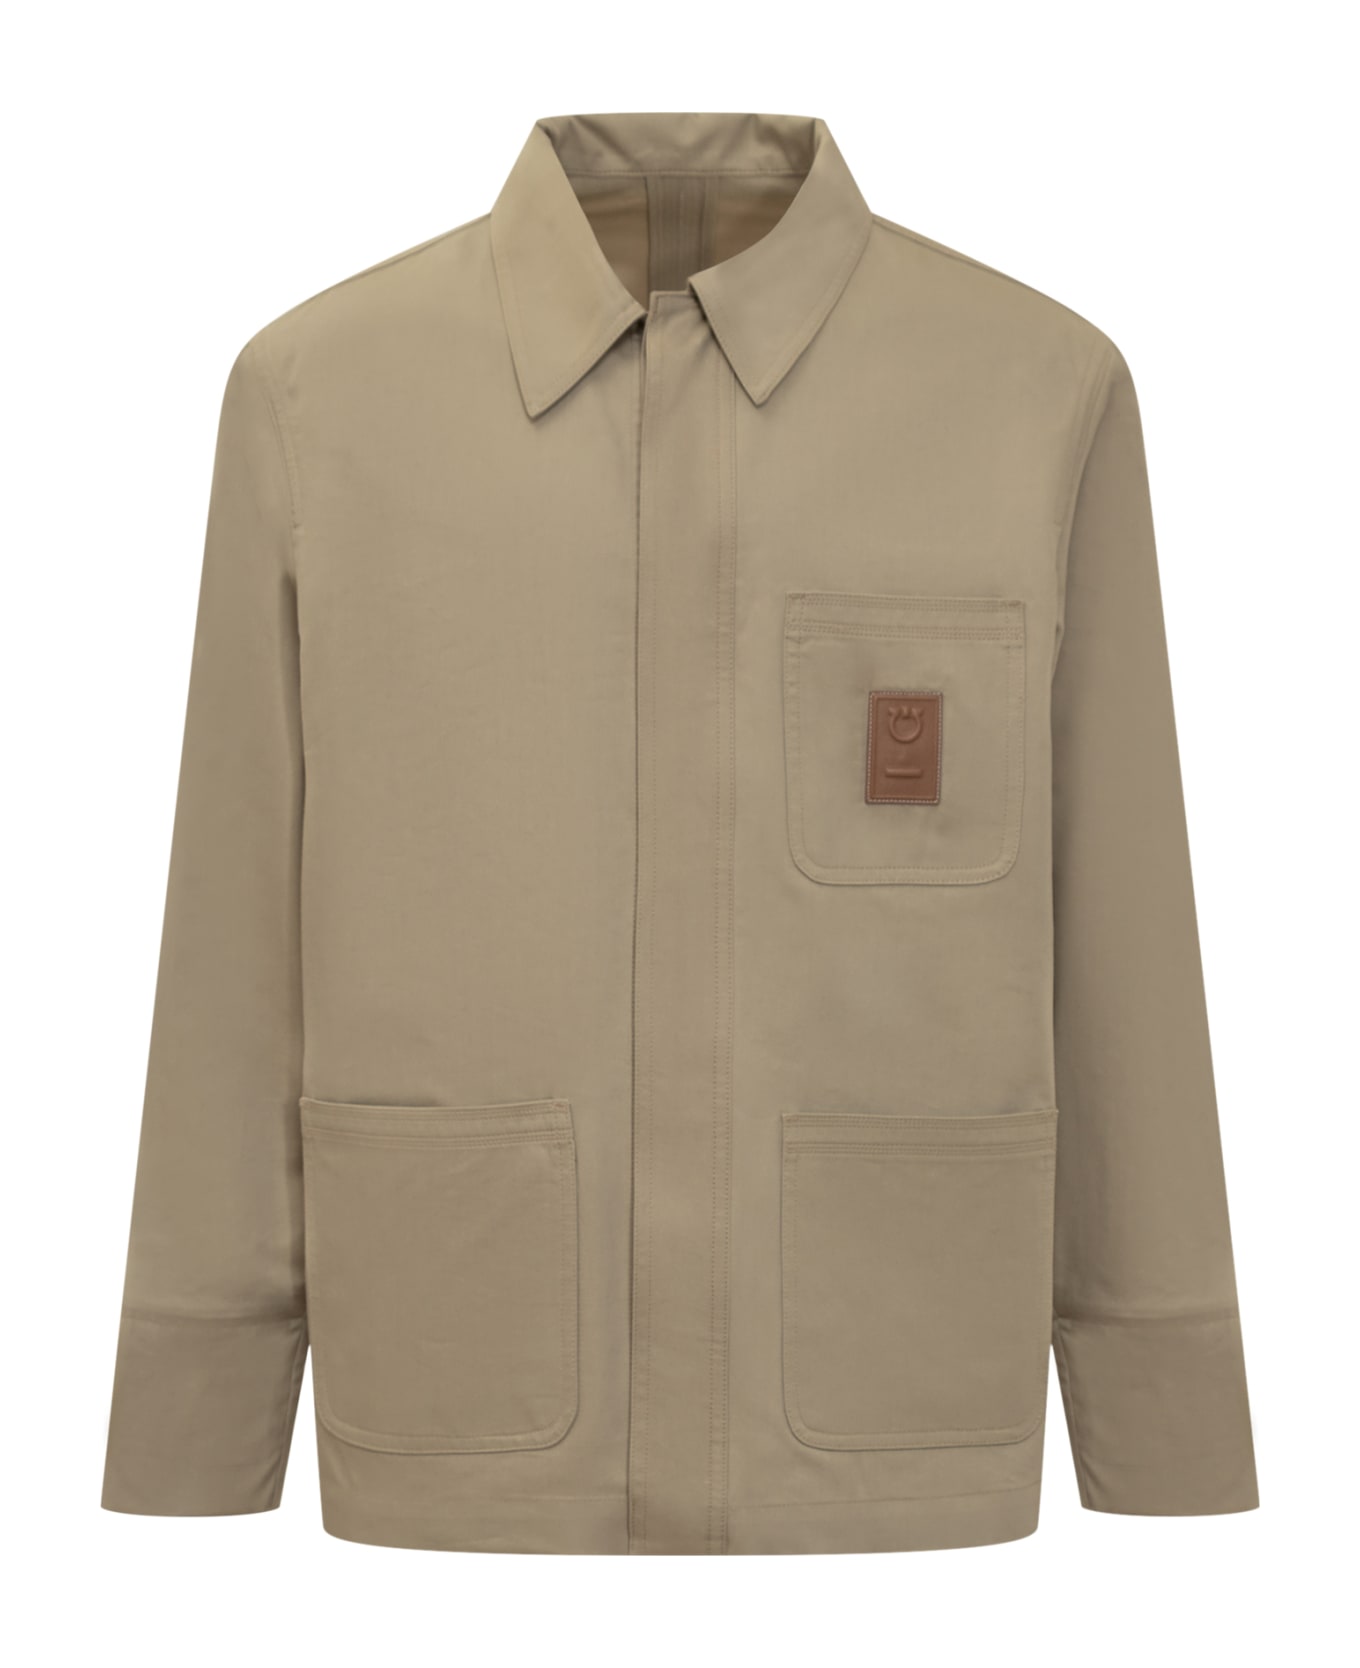 Ferragamo Jacket With Logo - SAND